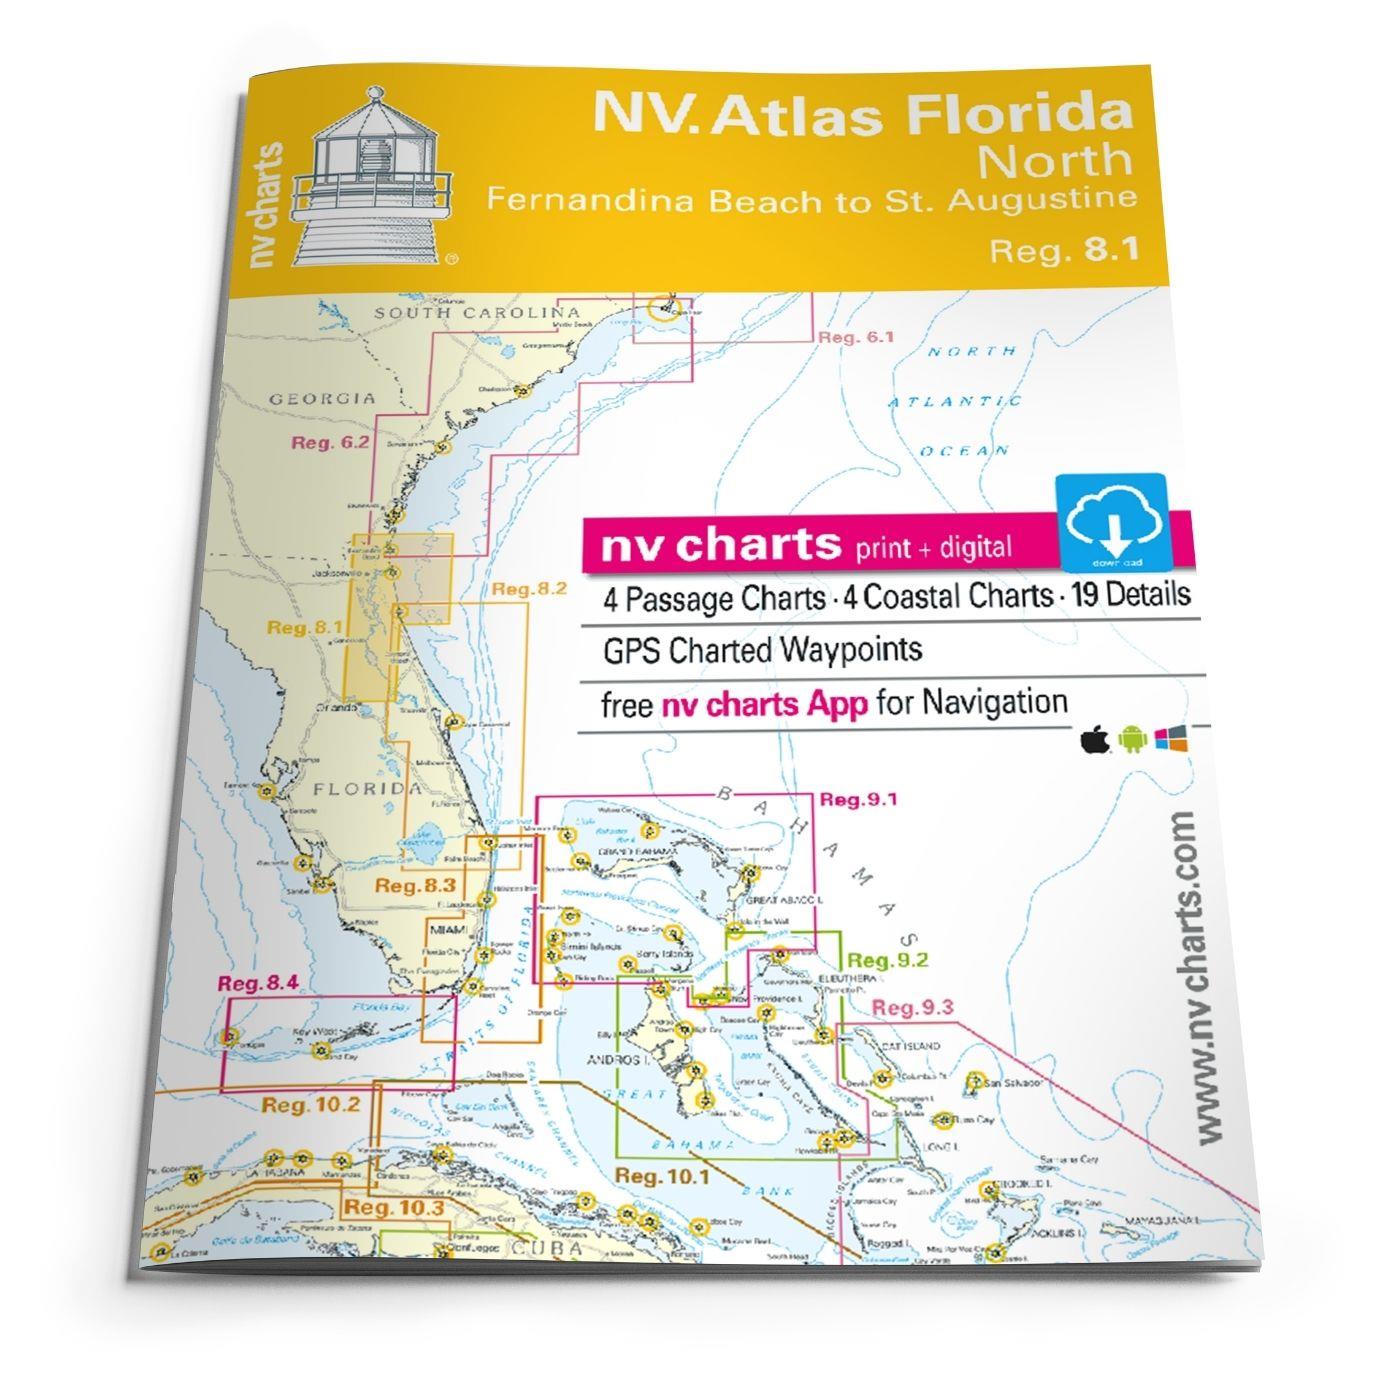 NV Atlas Florida North Reg. 8.1 - Fernandina Beach to St. Augustine